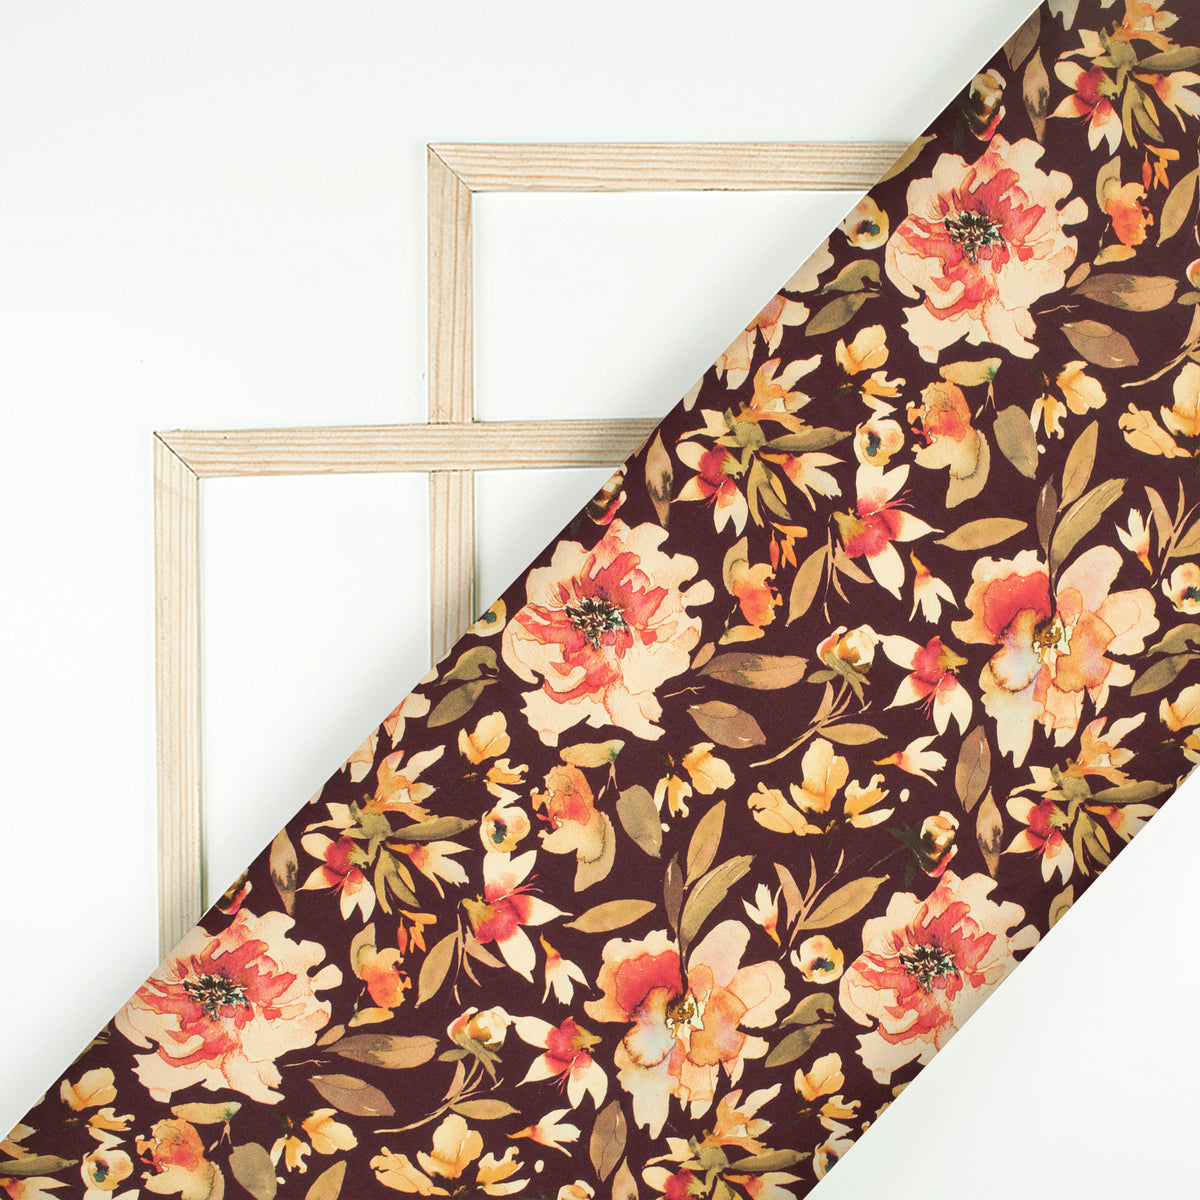 Stunning Floral Digital Print Assami Bemberg Satin Fabric